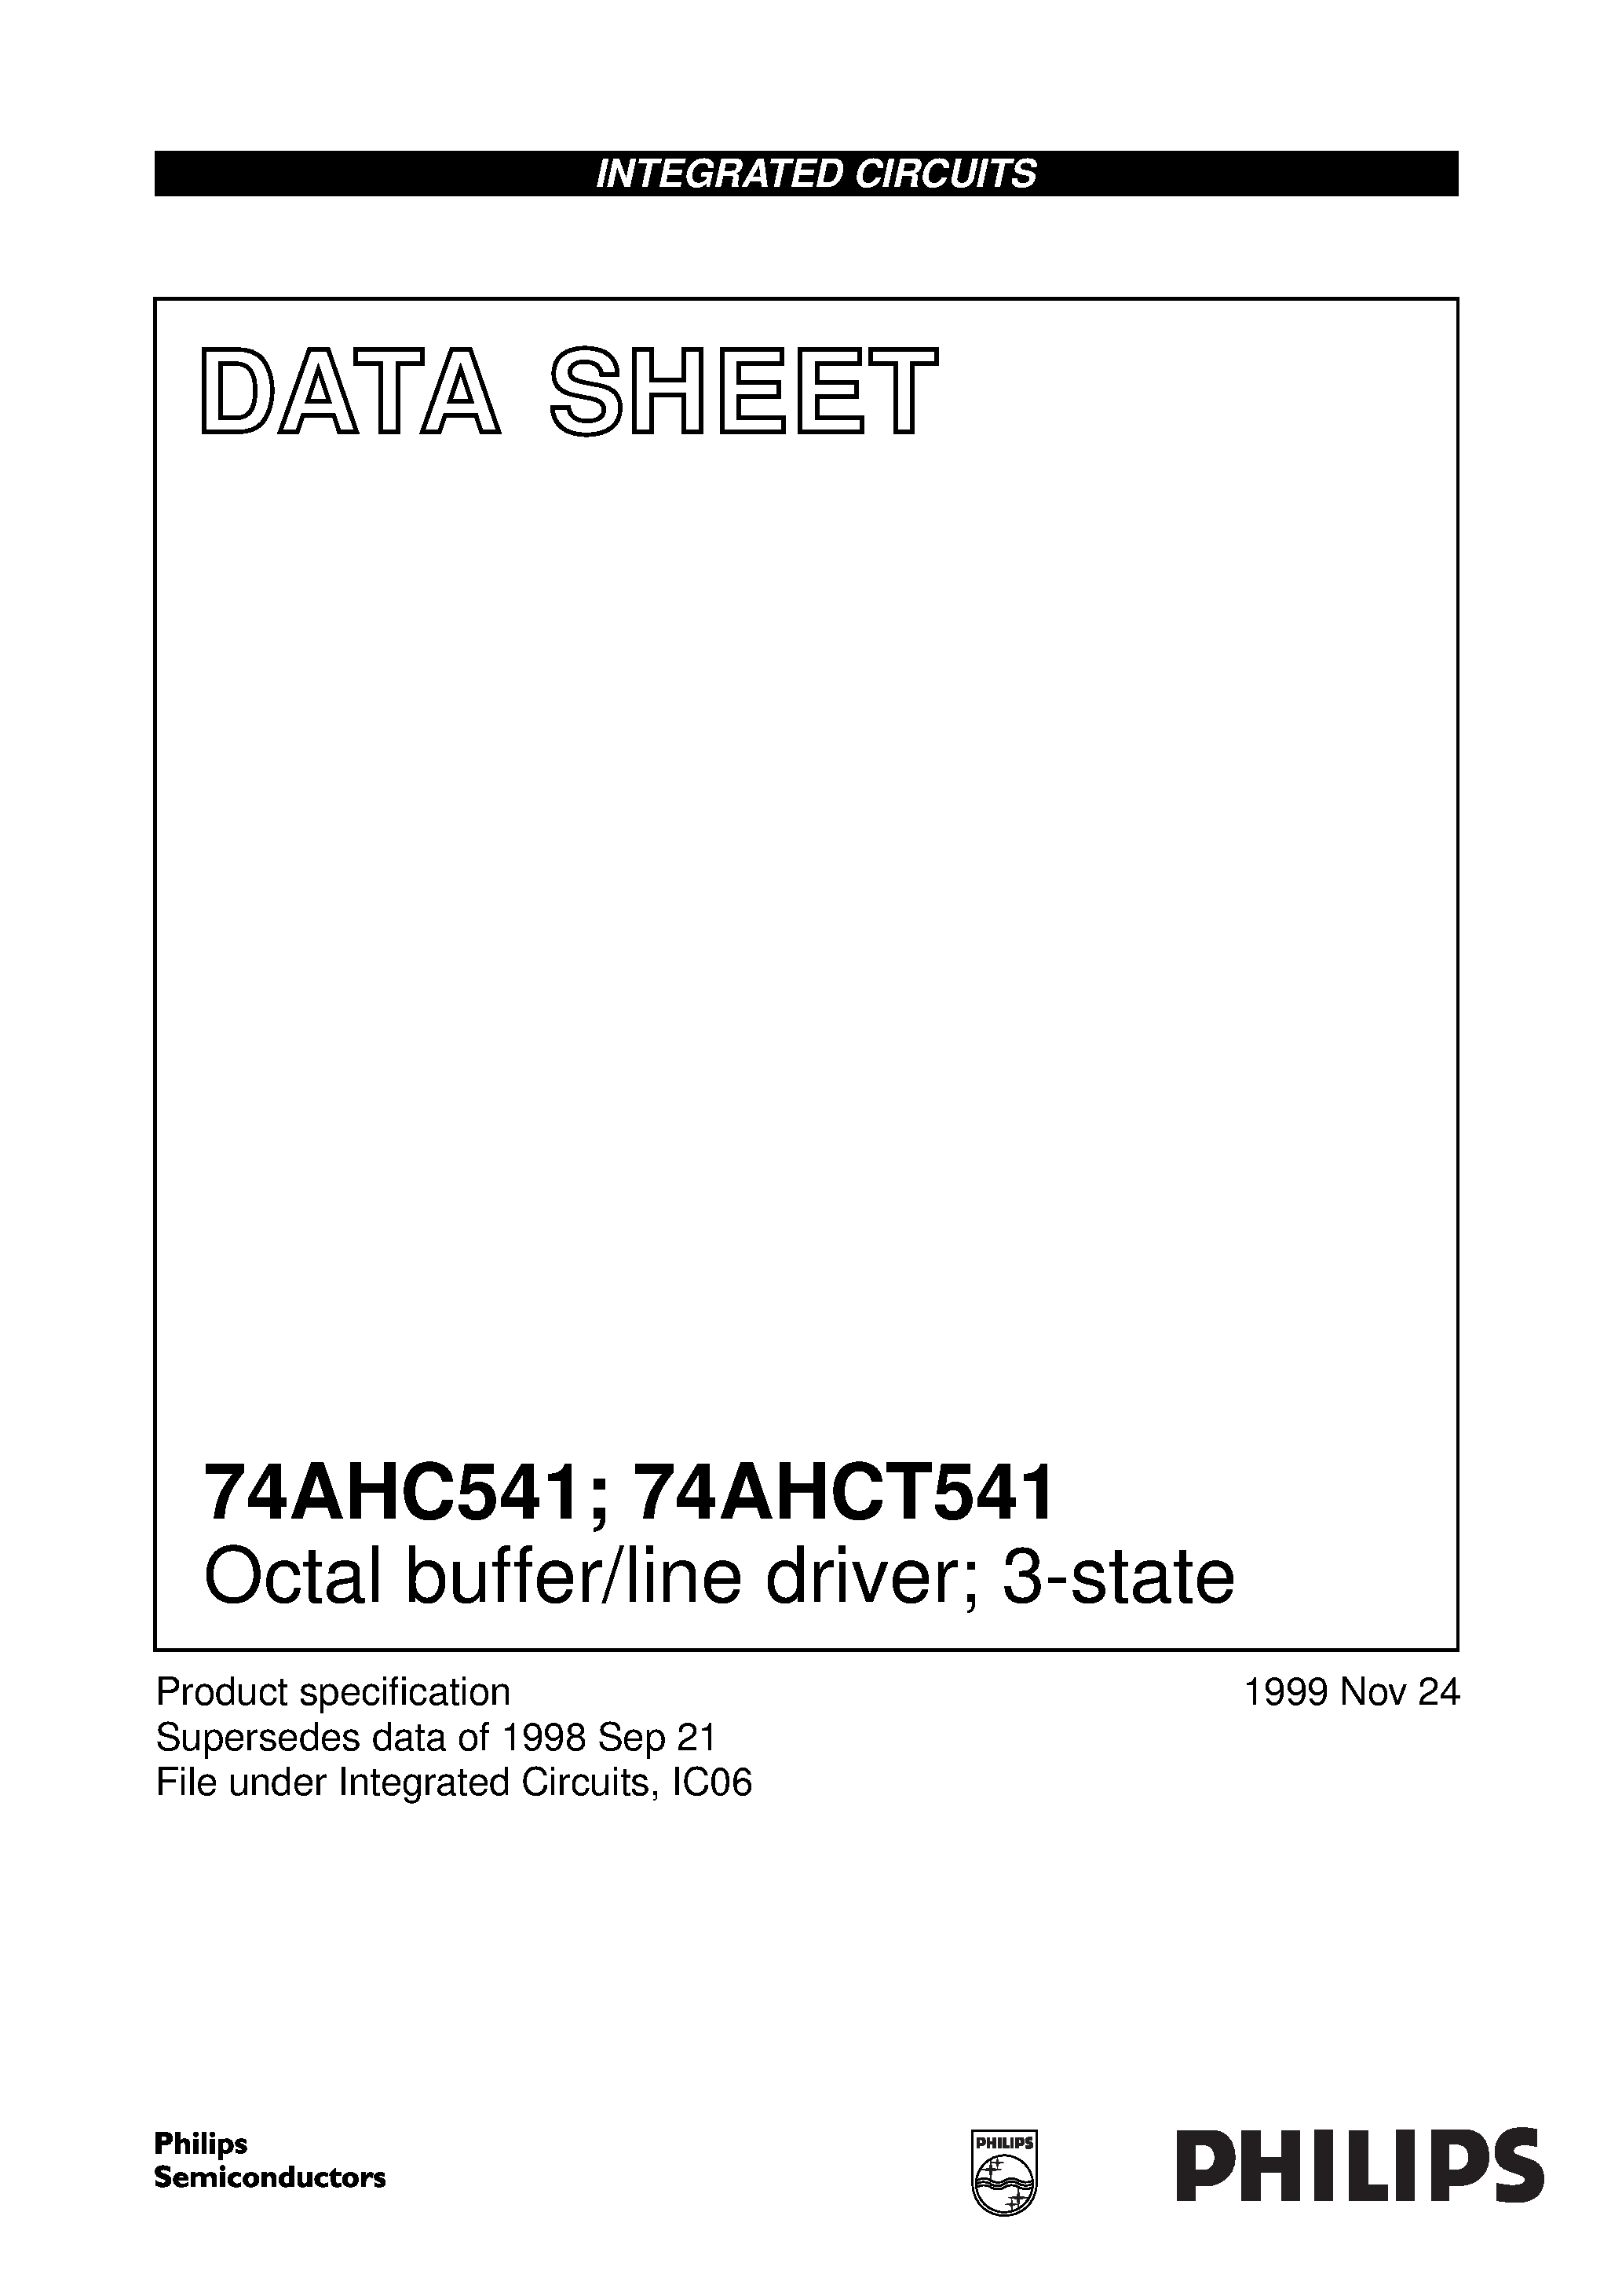 Даташит 74AHCT541 - Octal buffer/line driver; 3-state страница 1